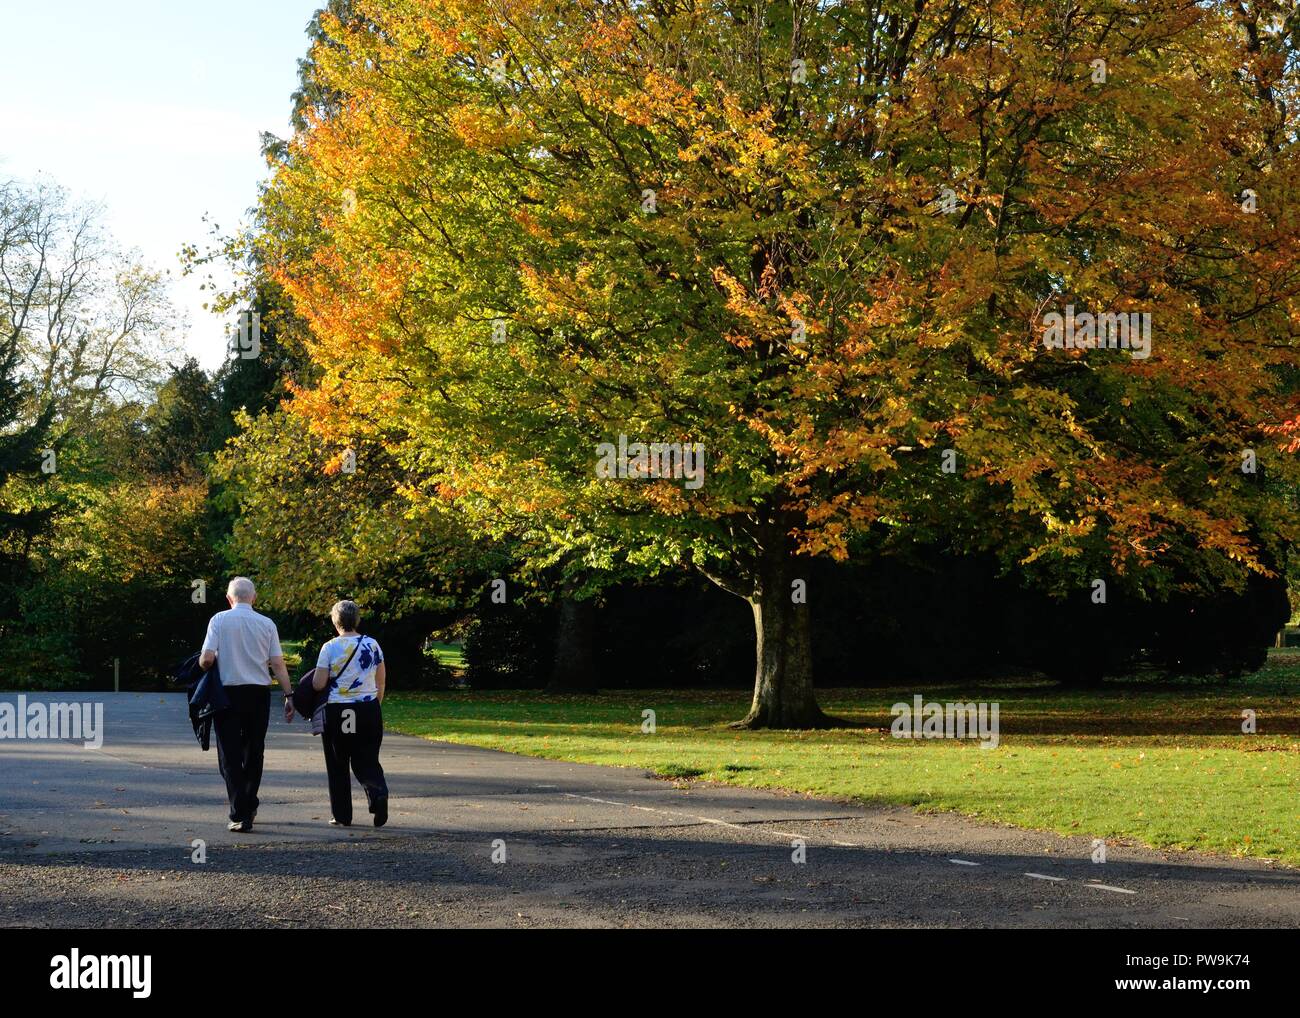 A mature couple walking through Rouken Glen Park, East Renfrewshire, Scotland, UK, Europe in warm Autumn sunshine. Stock Photo